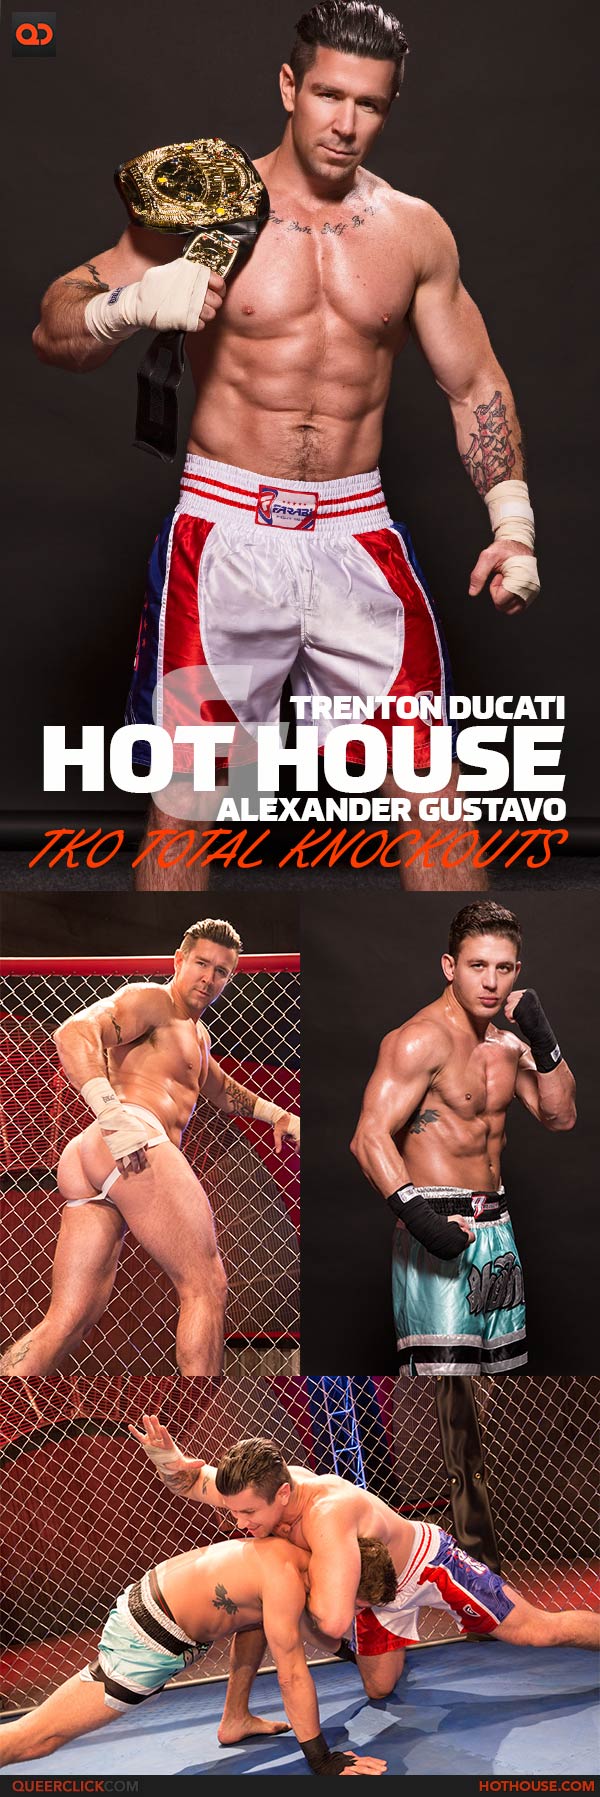 HotHouse: Trenton Ducati and Alexander Gustavo